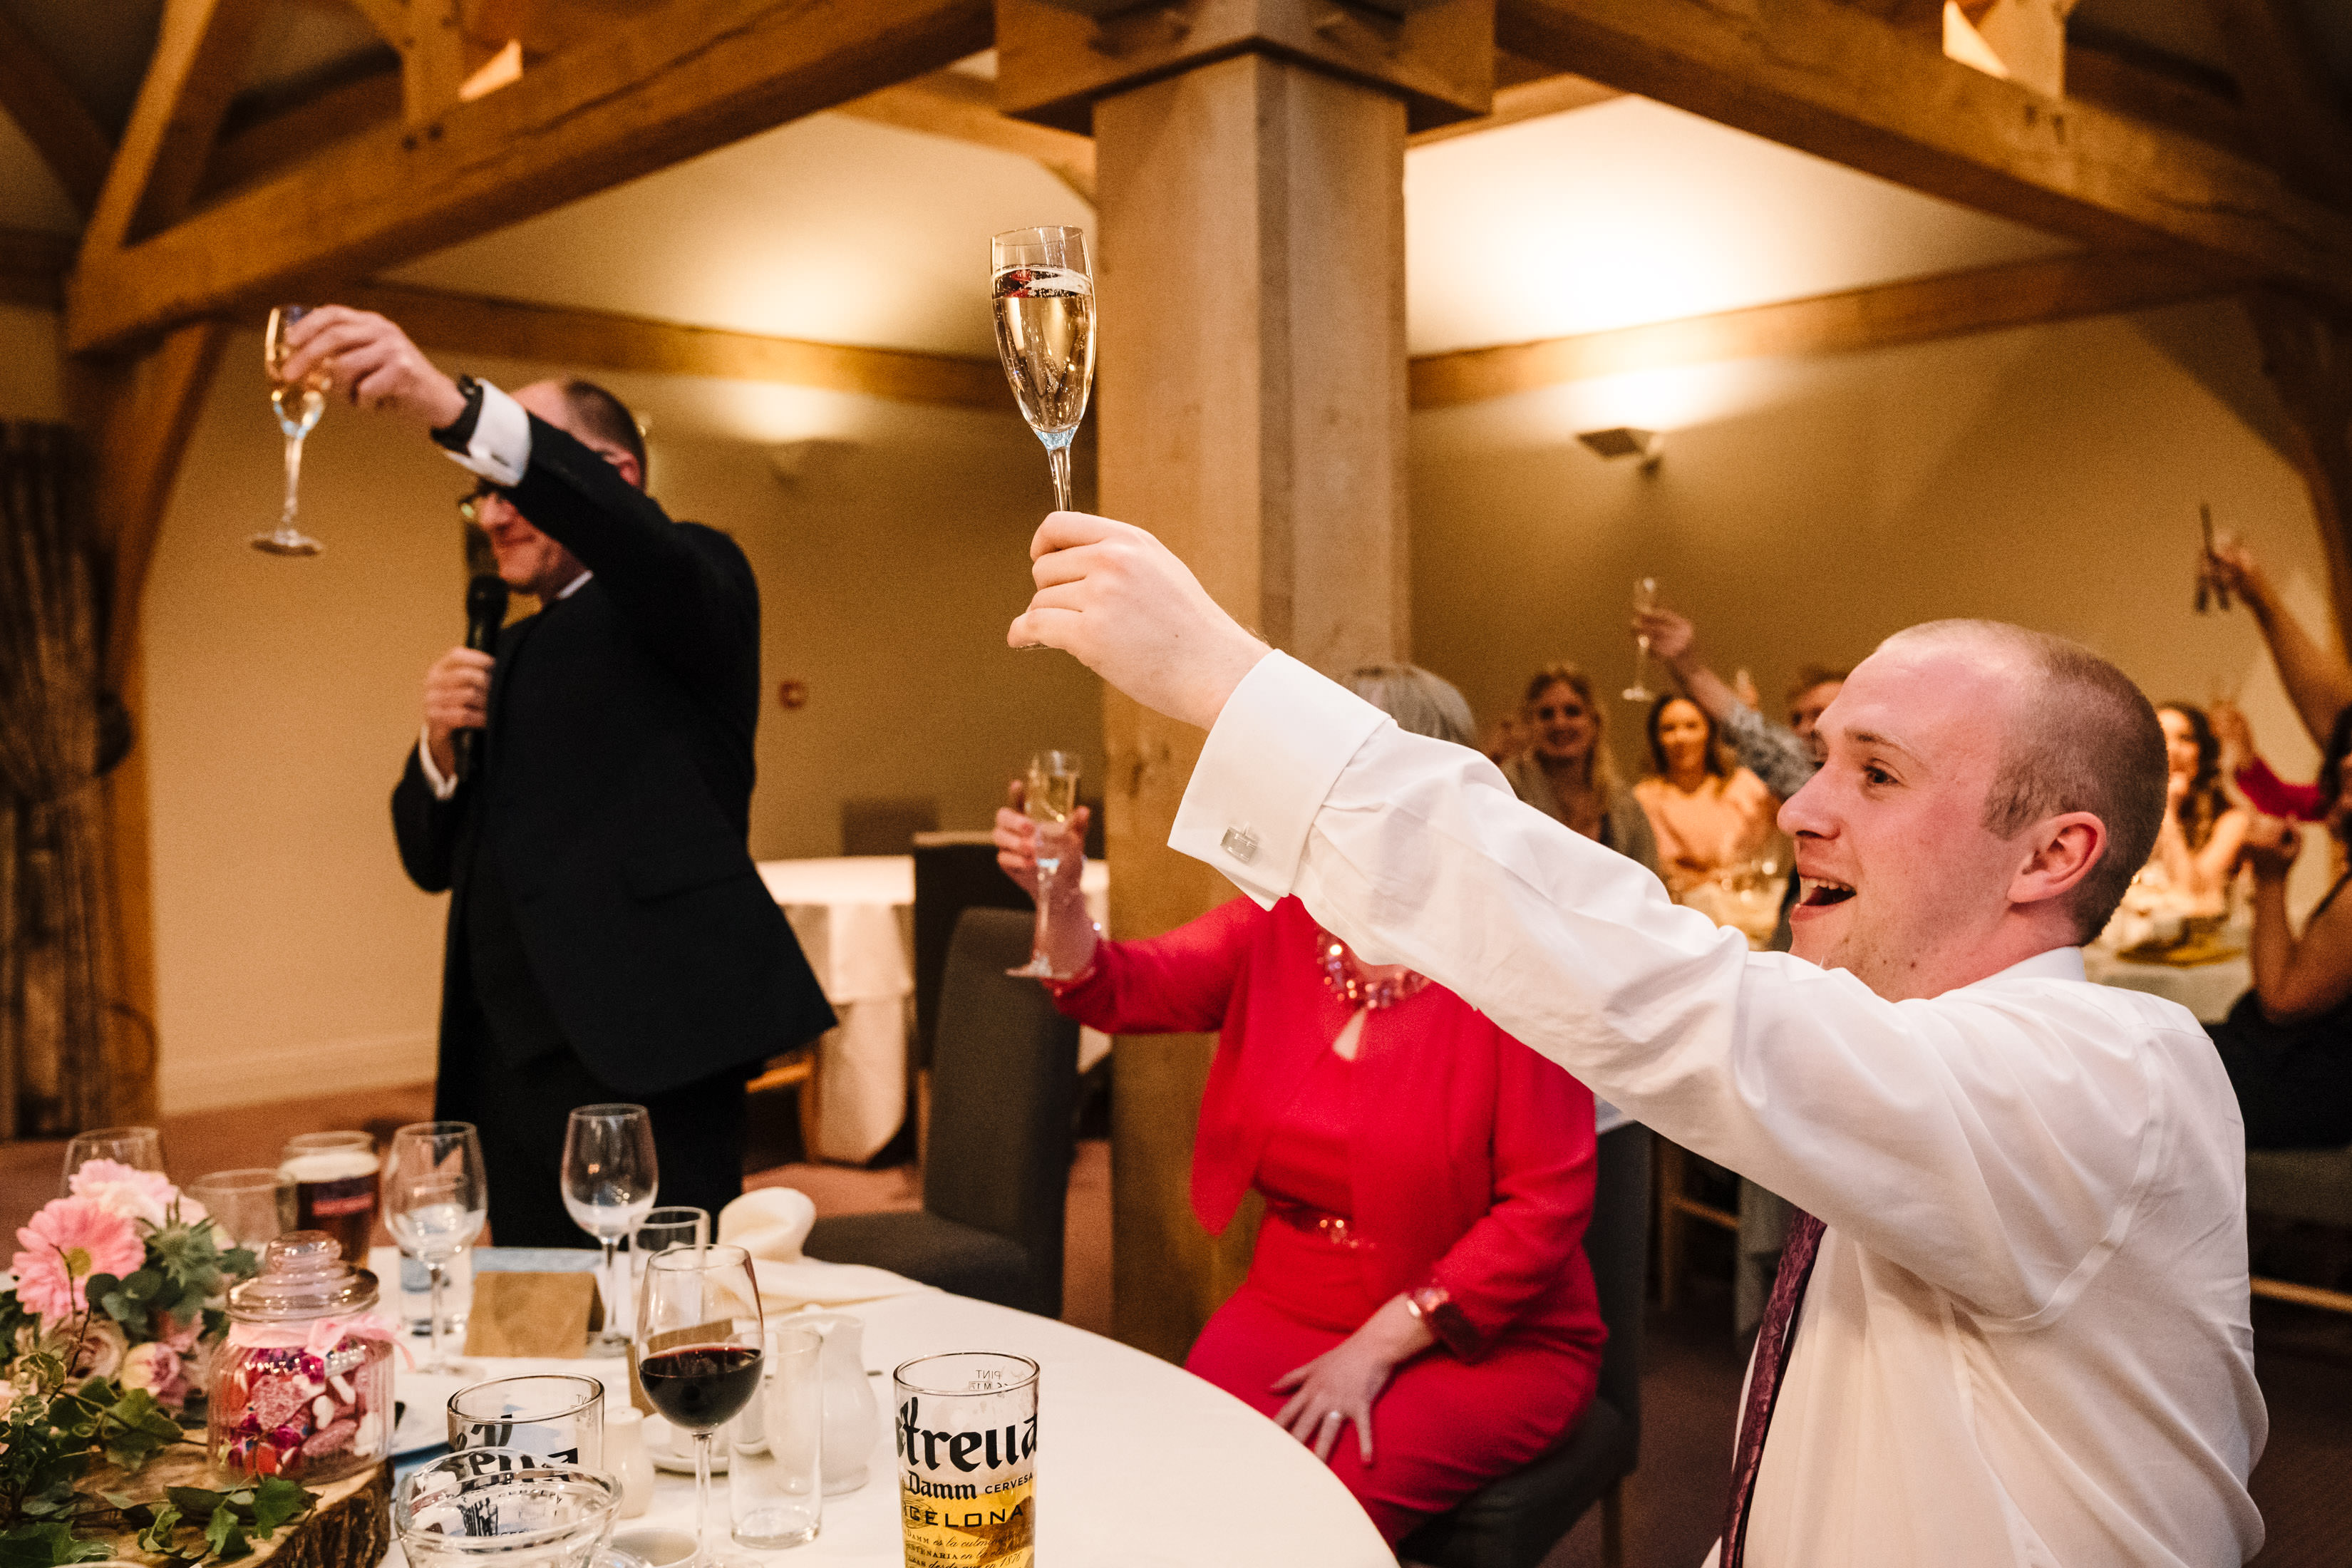 Guests raising a glass during speeches, white hart inn wedding